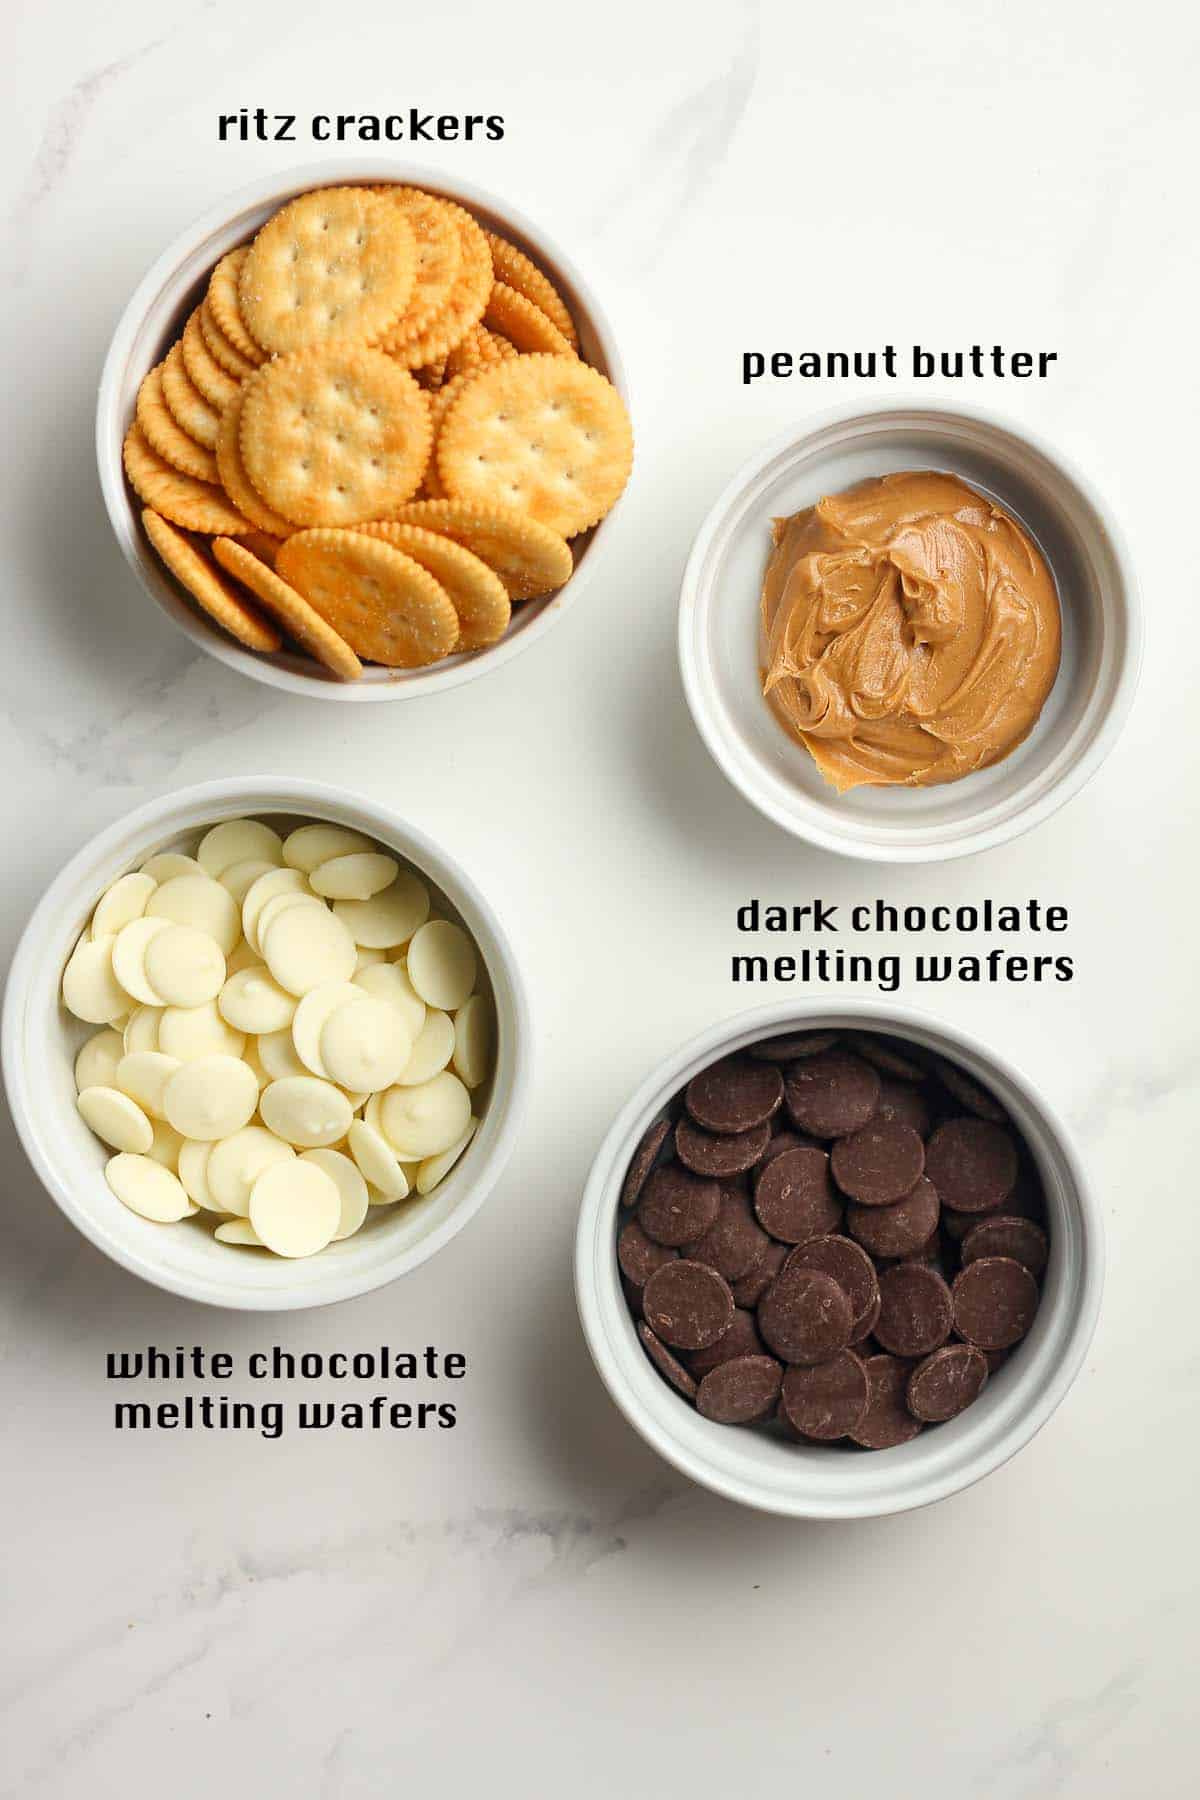 The ingredients for the ritz cracker cookies.